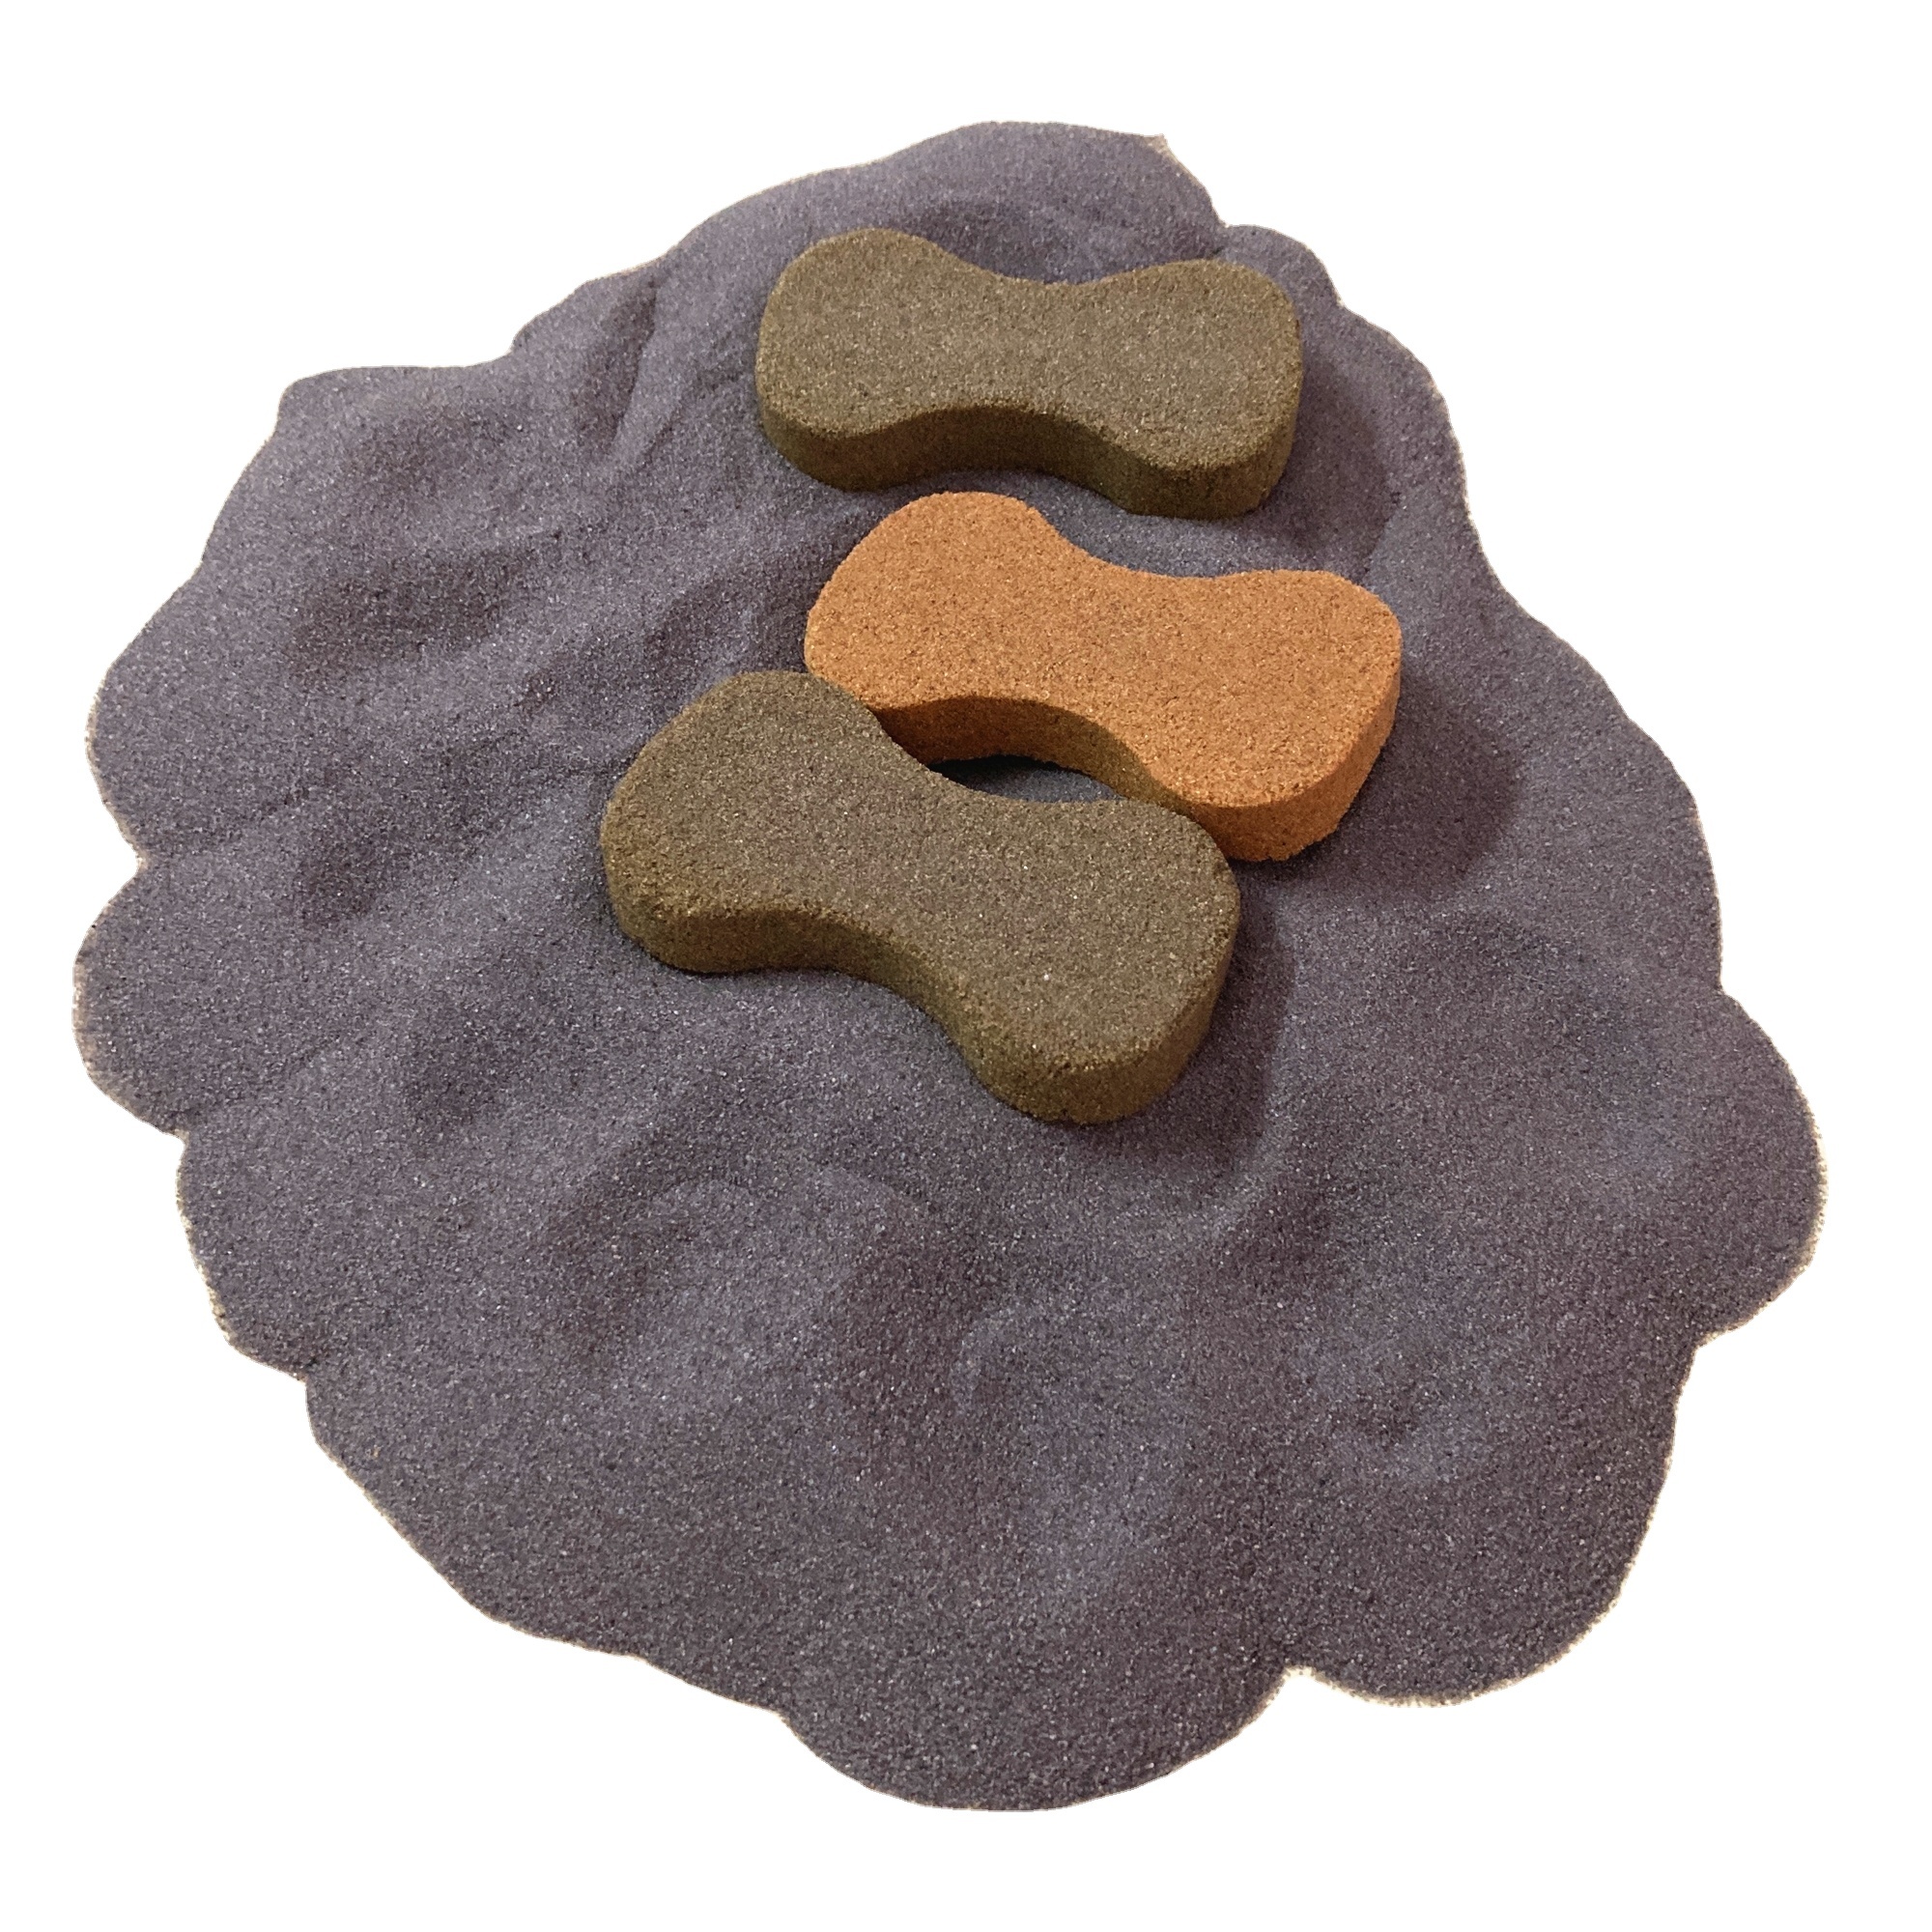 Ceramic Foundry Sand 70-140 Mesh Ceramic Sand Ceramsite For Resin Coated Sand Casting